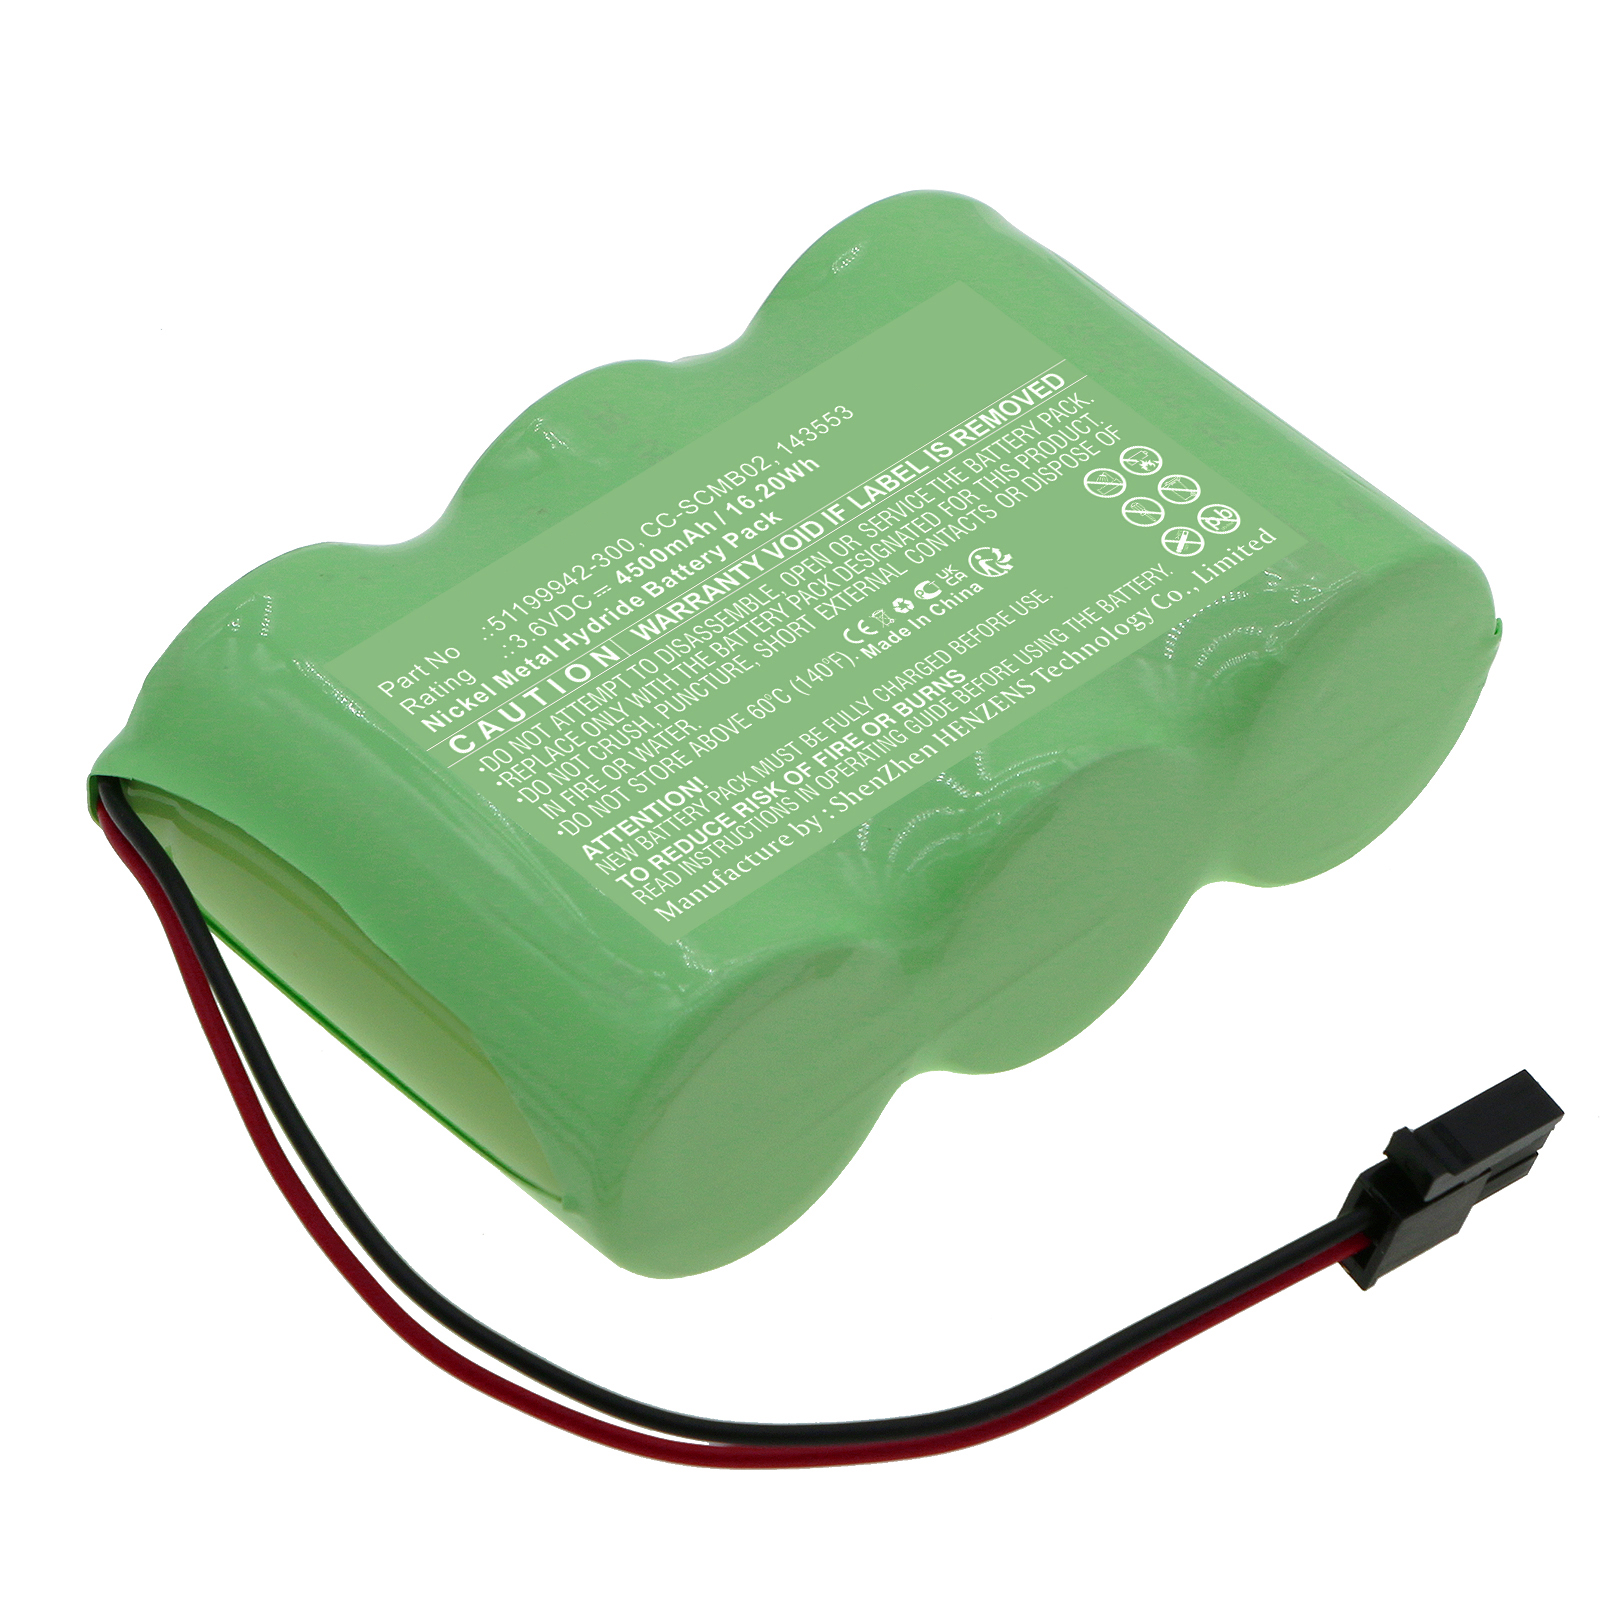 Synergy Digital Alarm System Battery, Compatible with Honeywell 143553 Alarm System Battery (Ni-MH, 3.6V, 4500mAh)